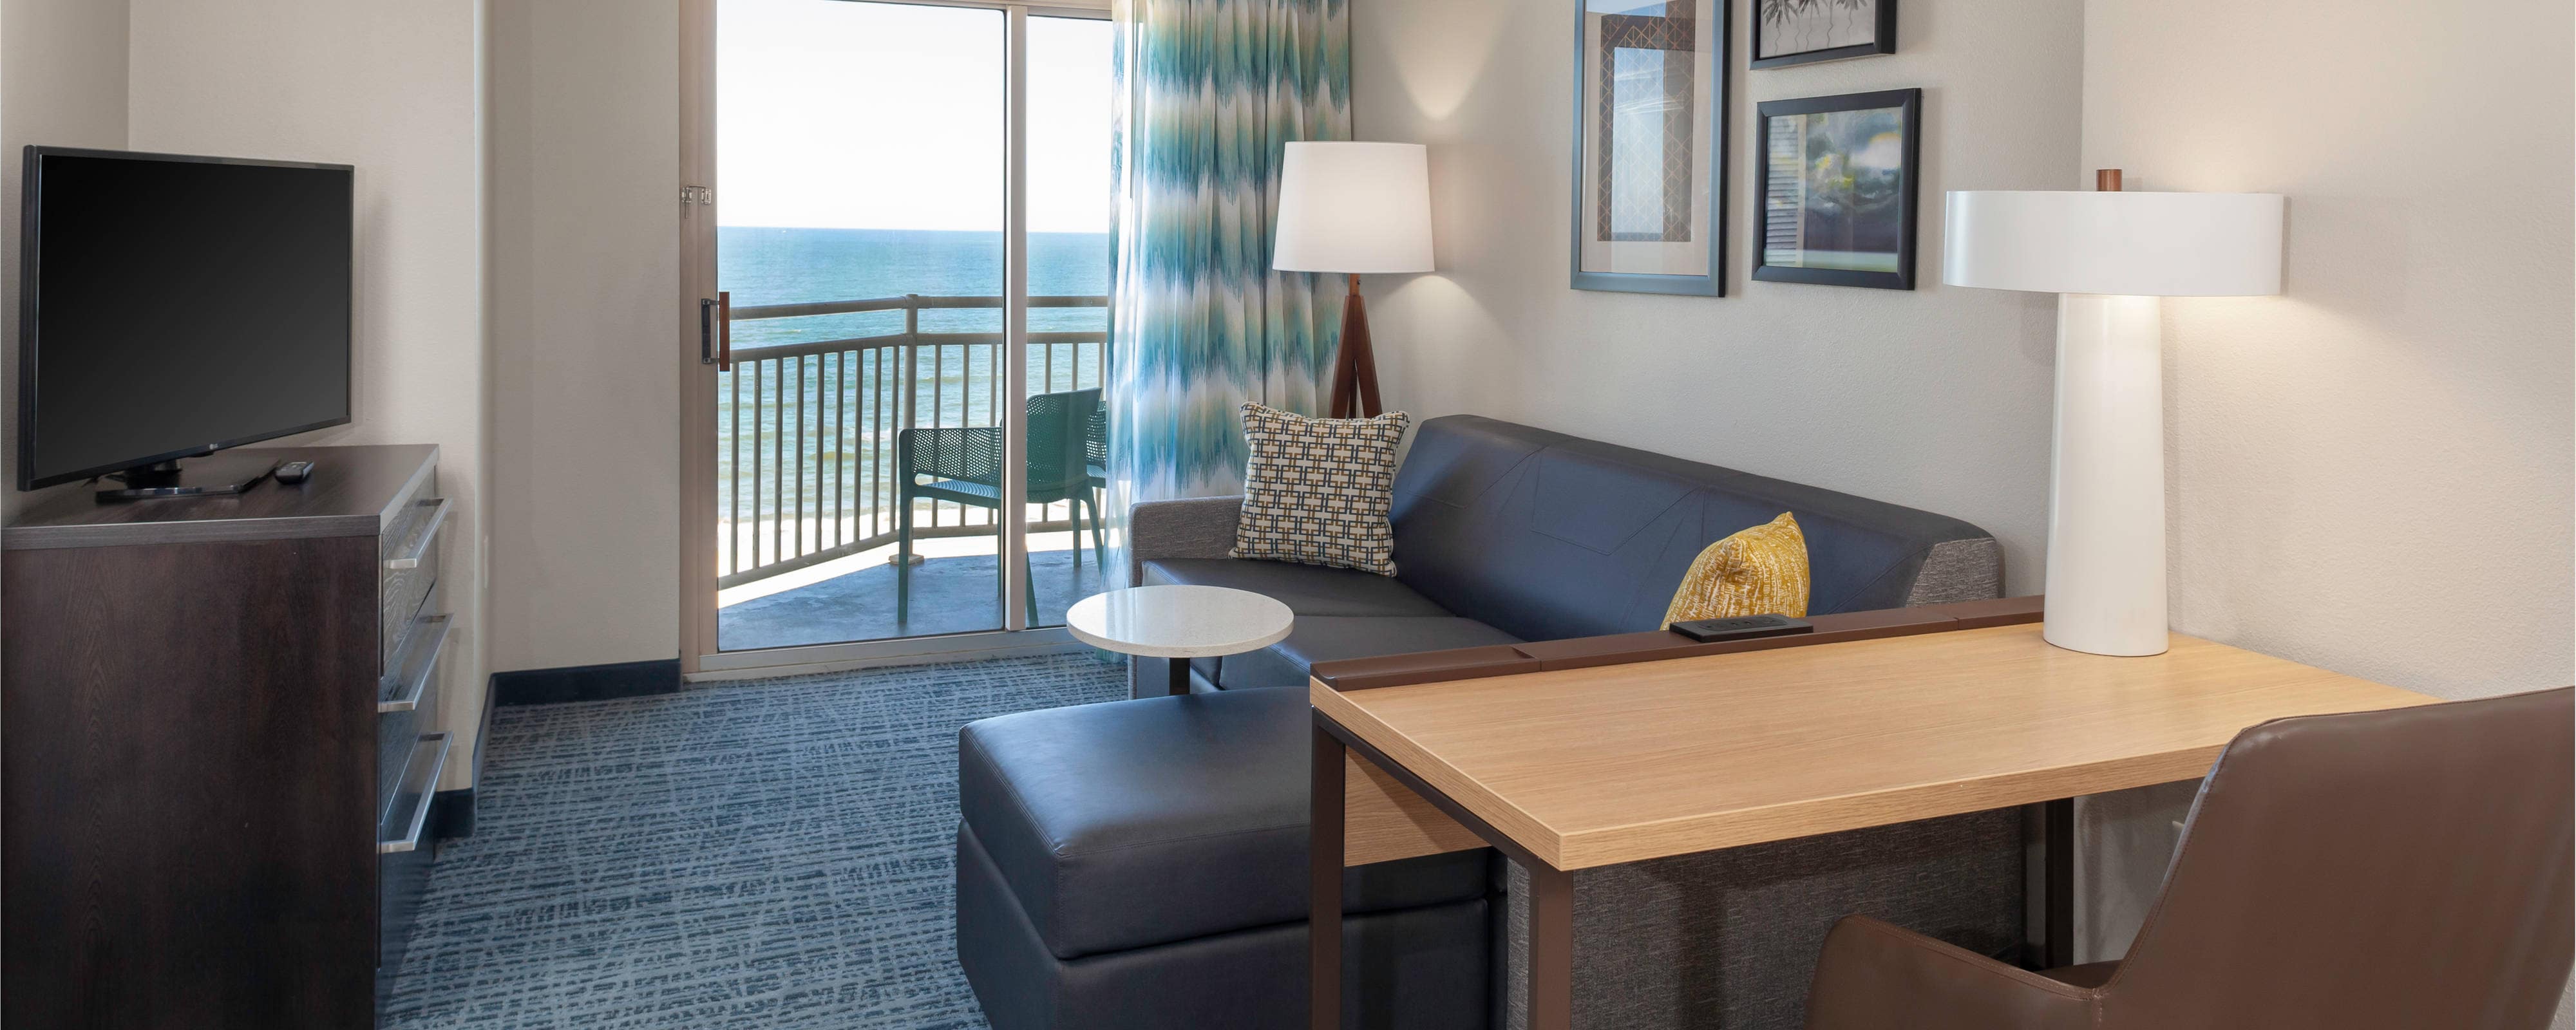 Virginia Beach Hotels Residence Inn Virginia Beach Oceanfront